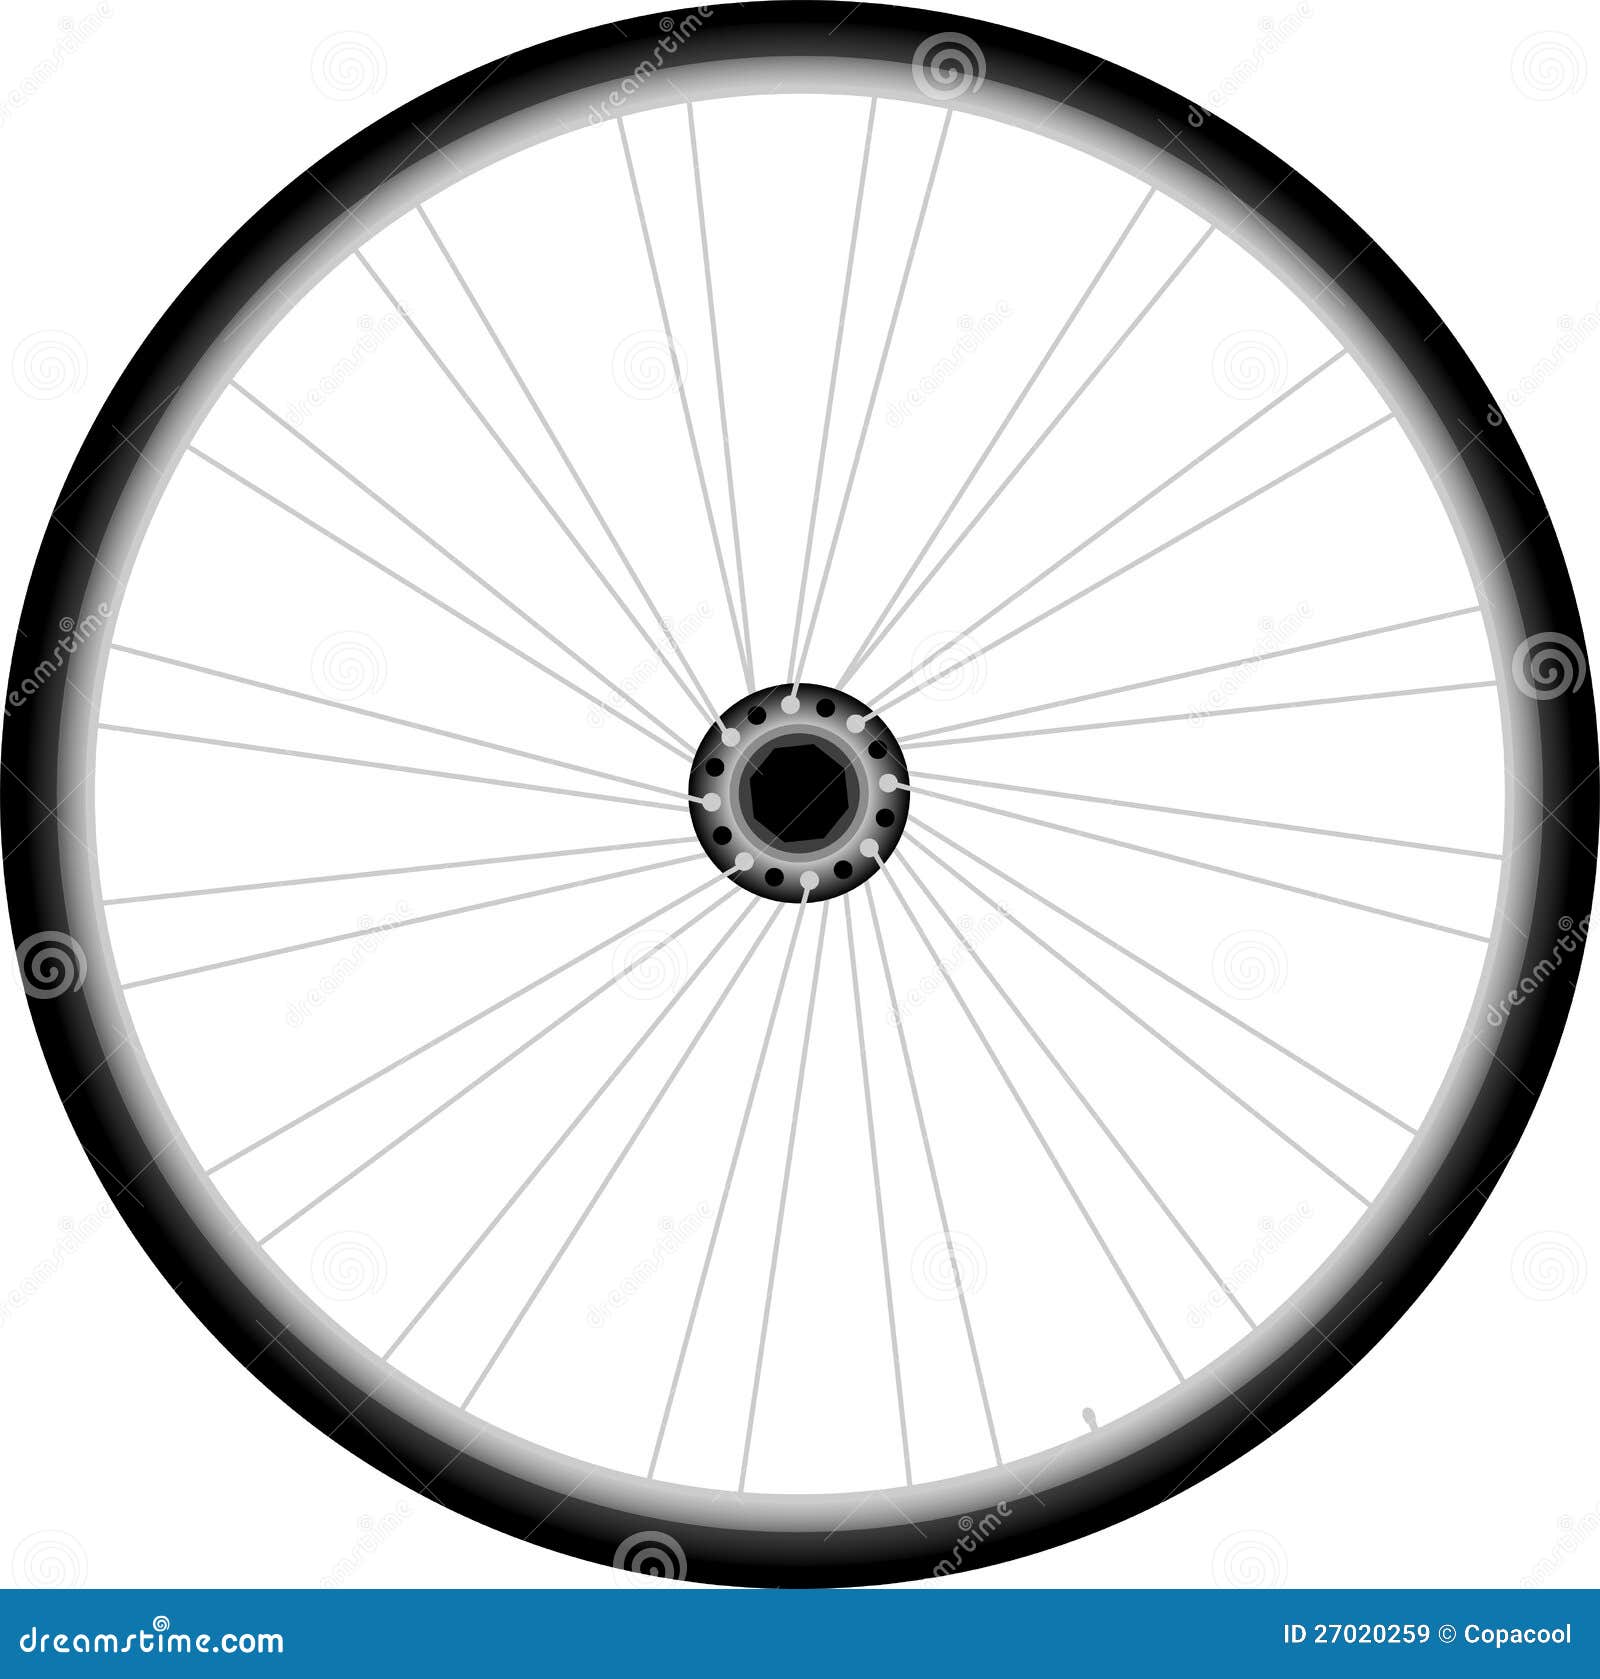 bicycle wheel clip art free - photo #27